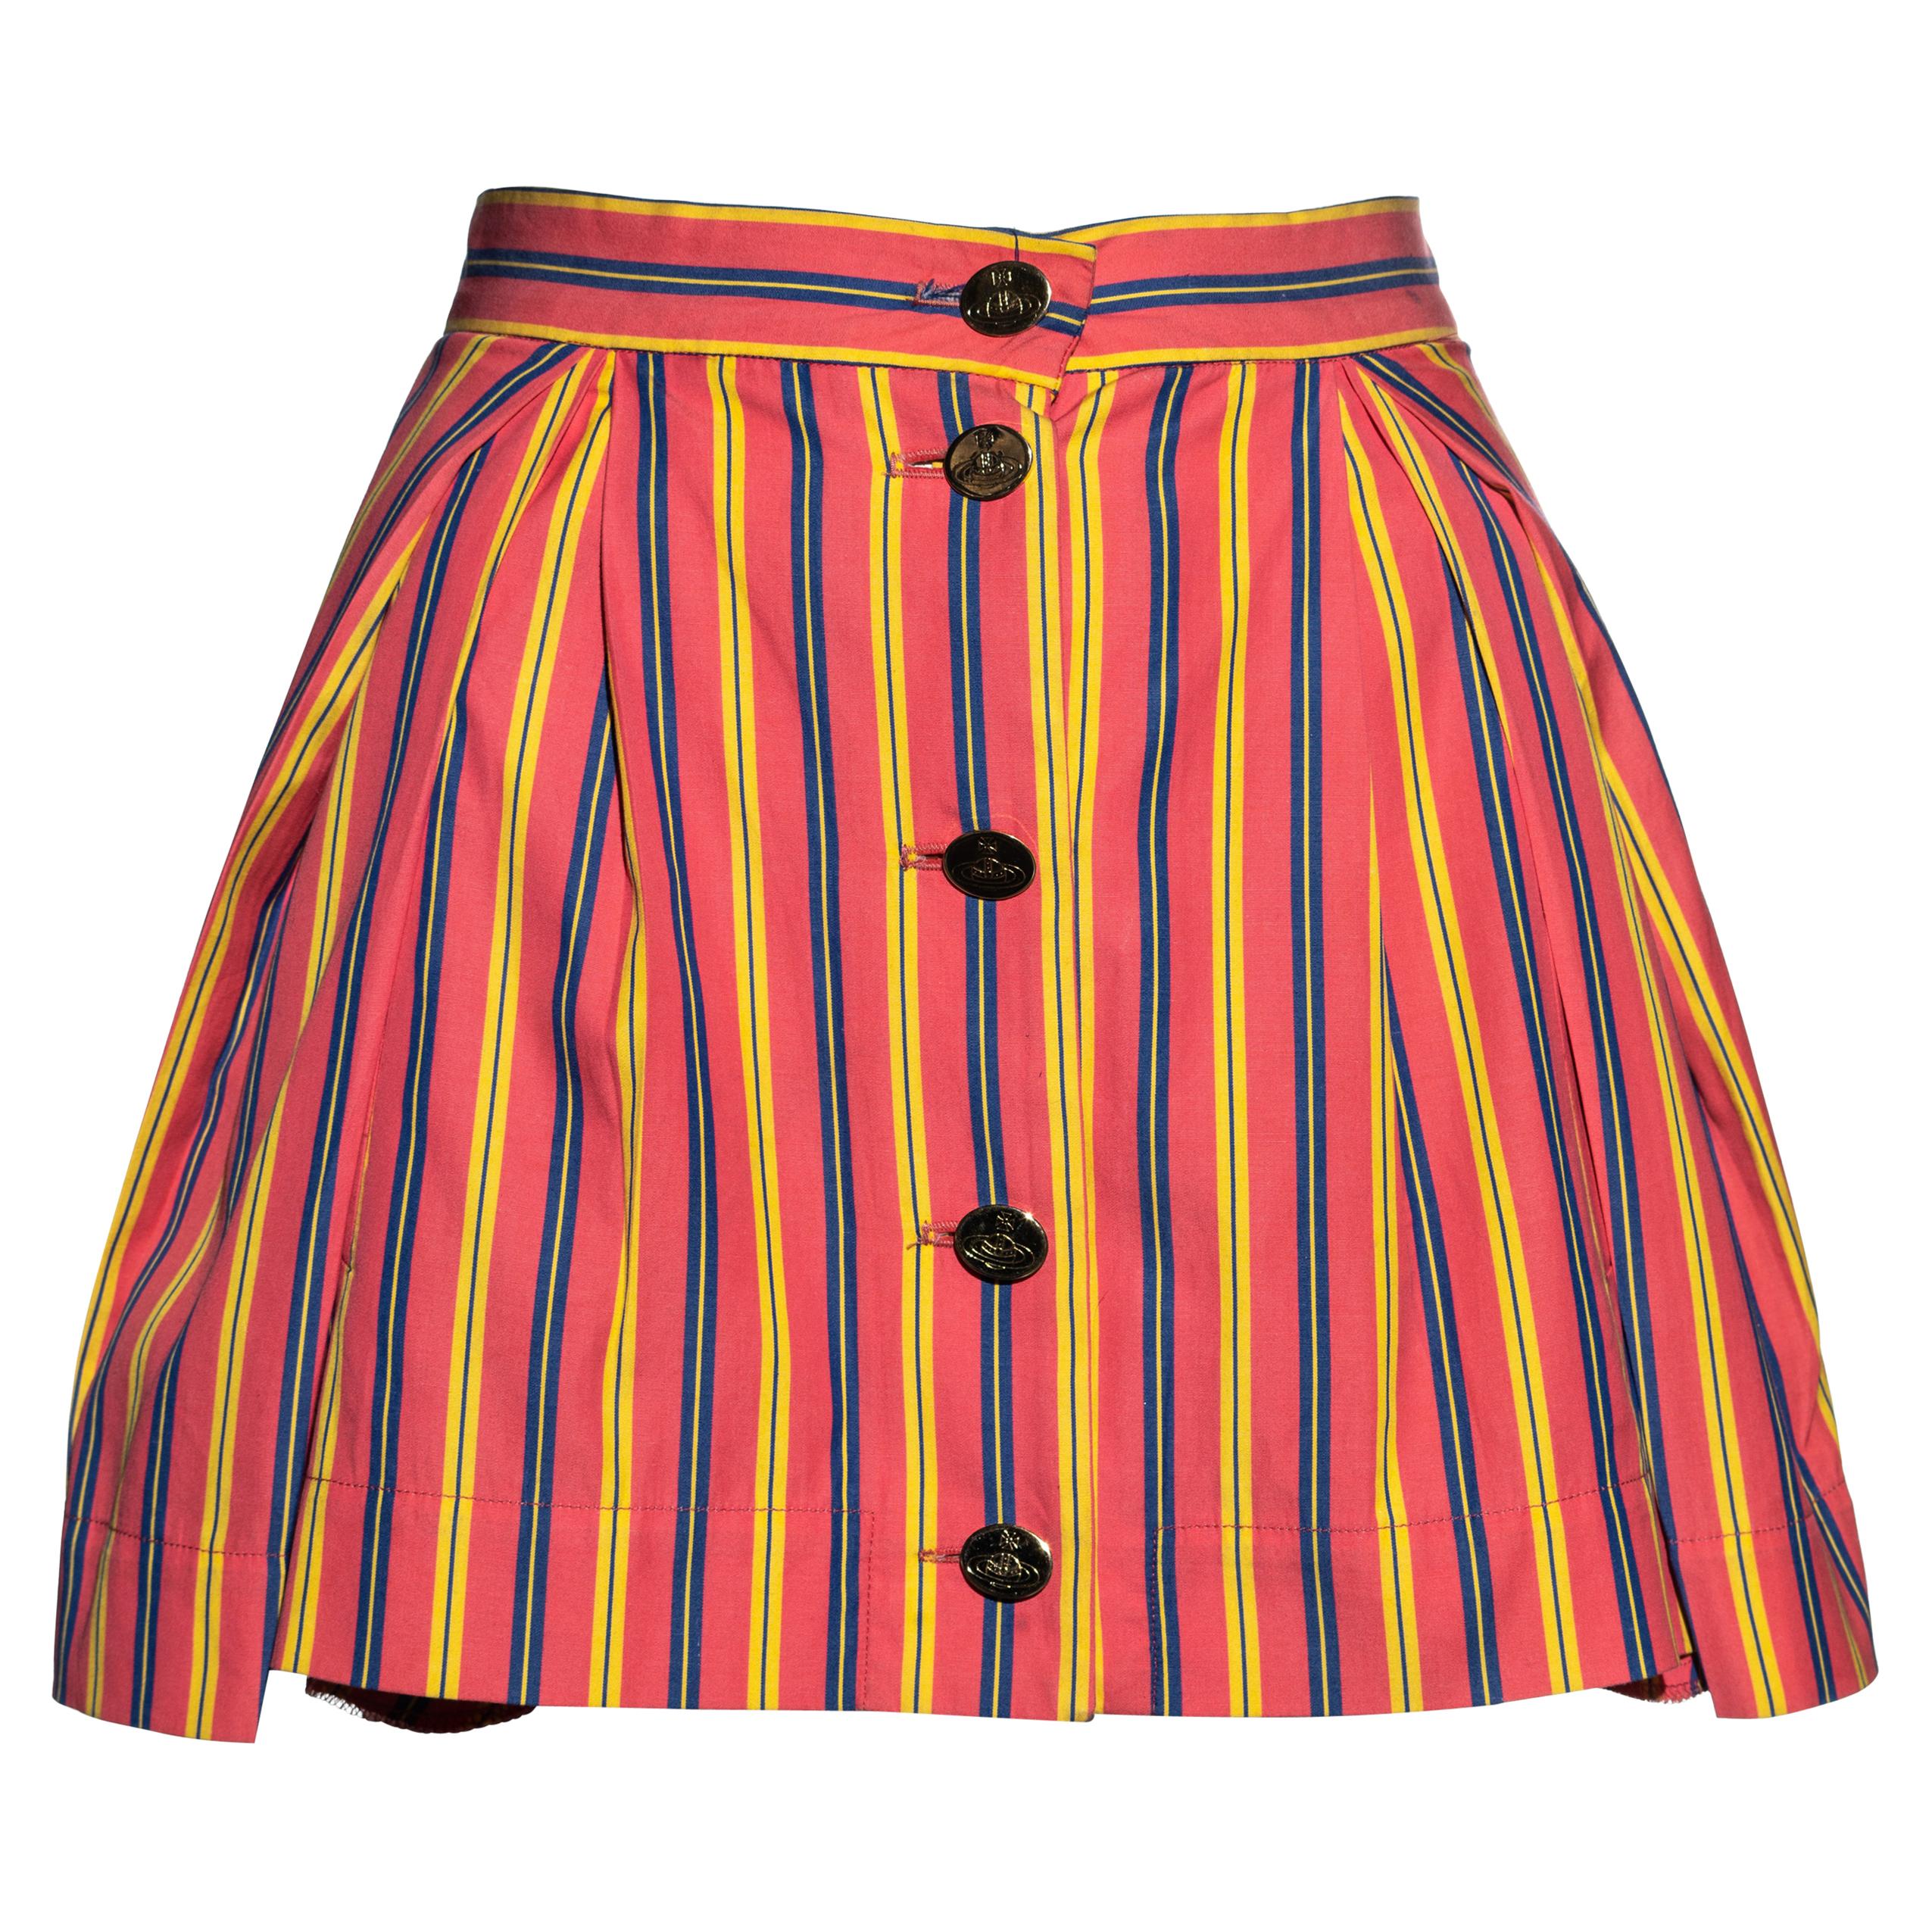 Vivienne Westwood salmon pink striped cotton pleated mini skirt, ss 1993